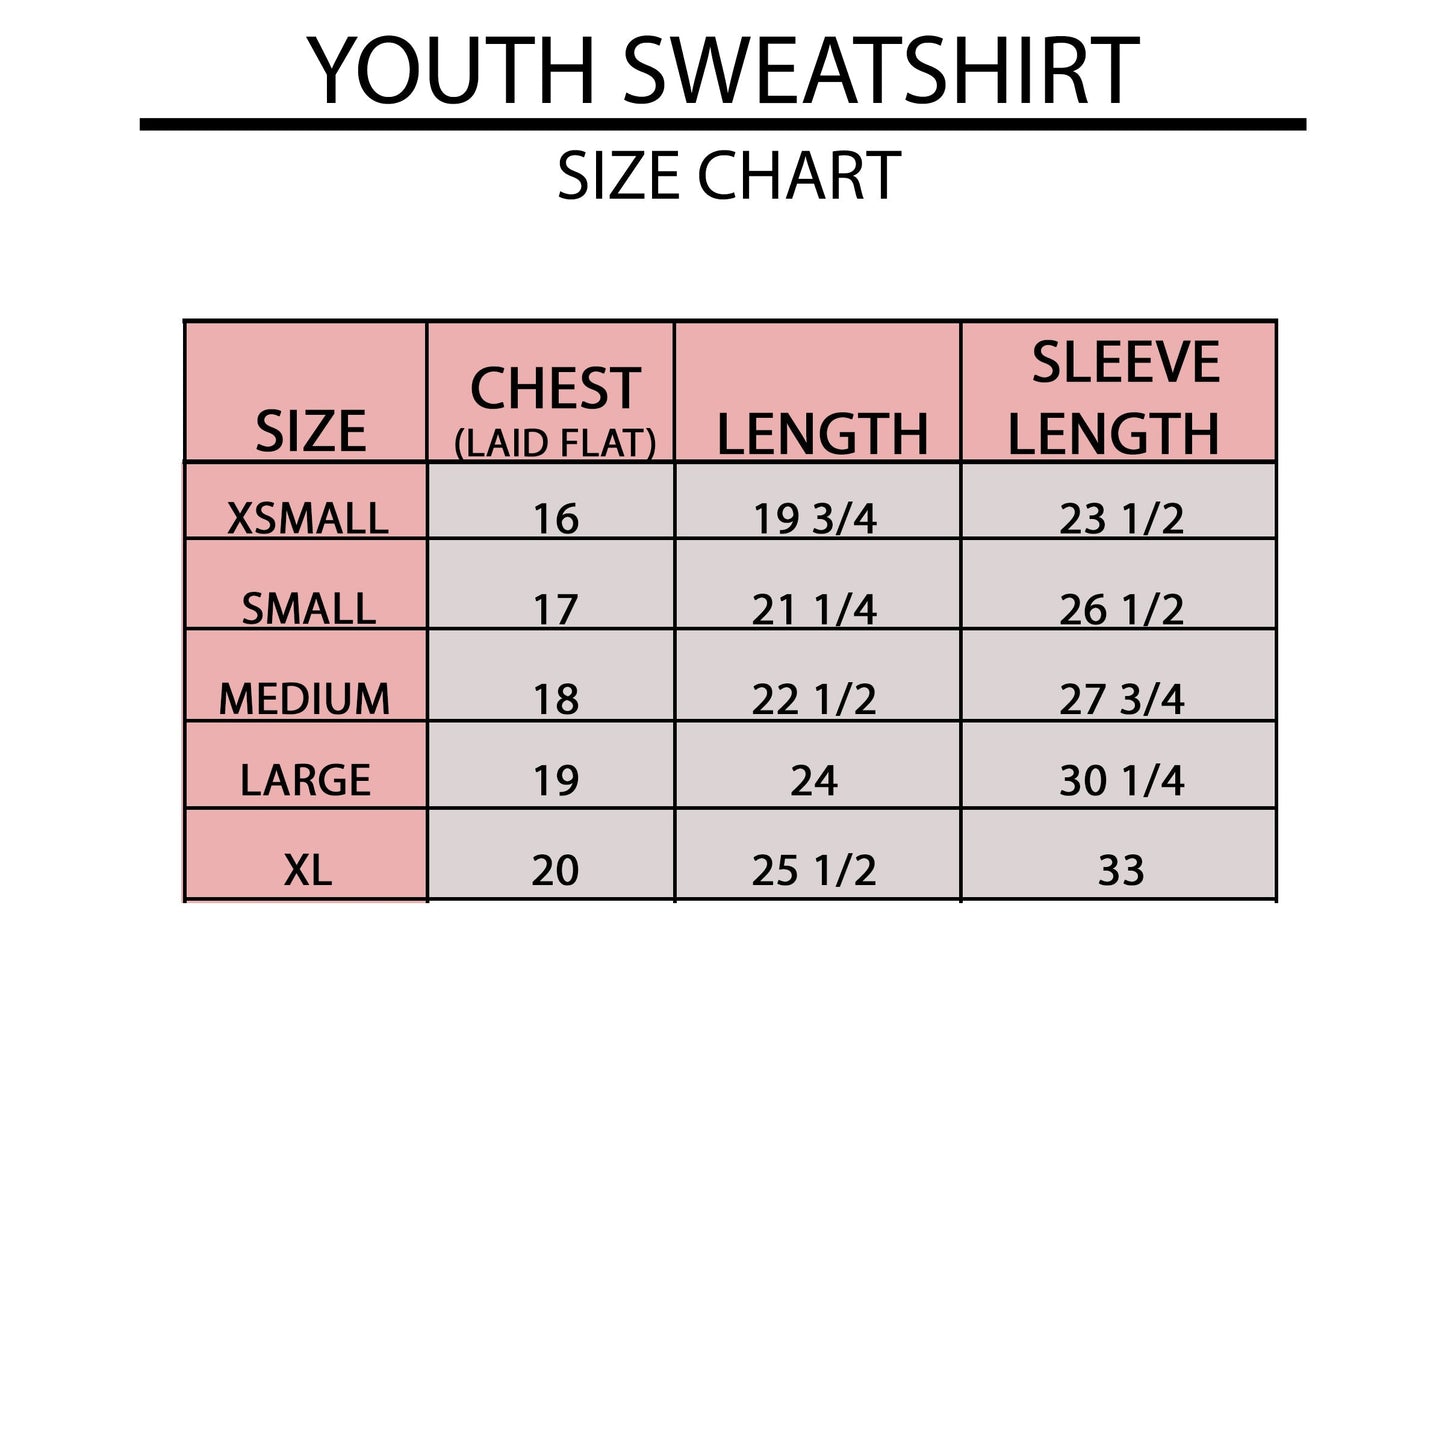 Girls Can | Youth Sweatshirt